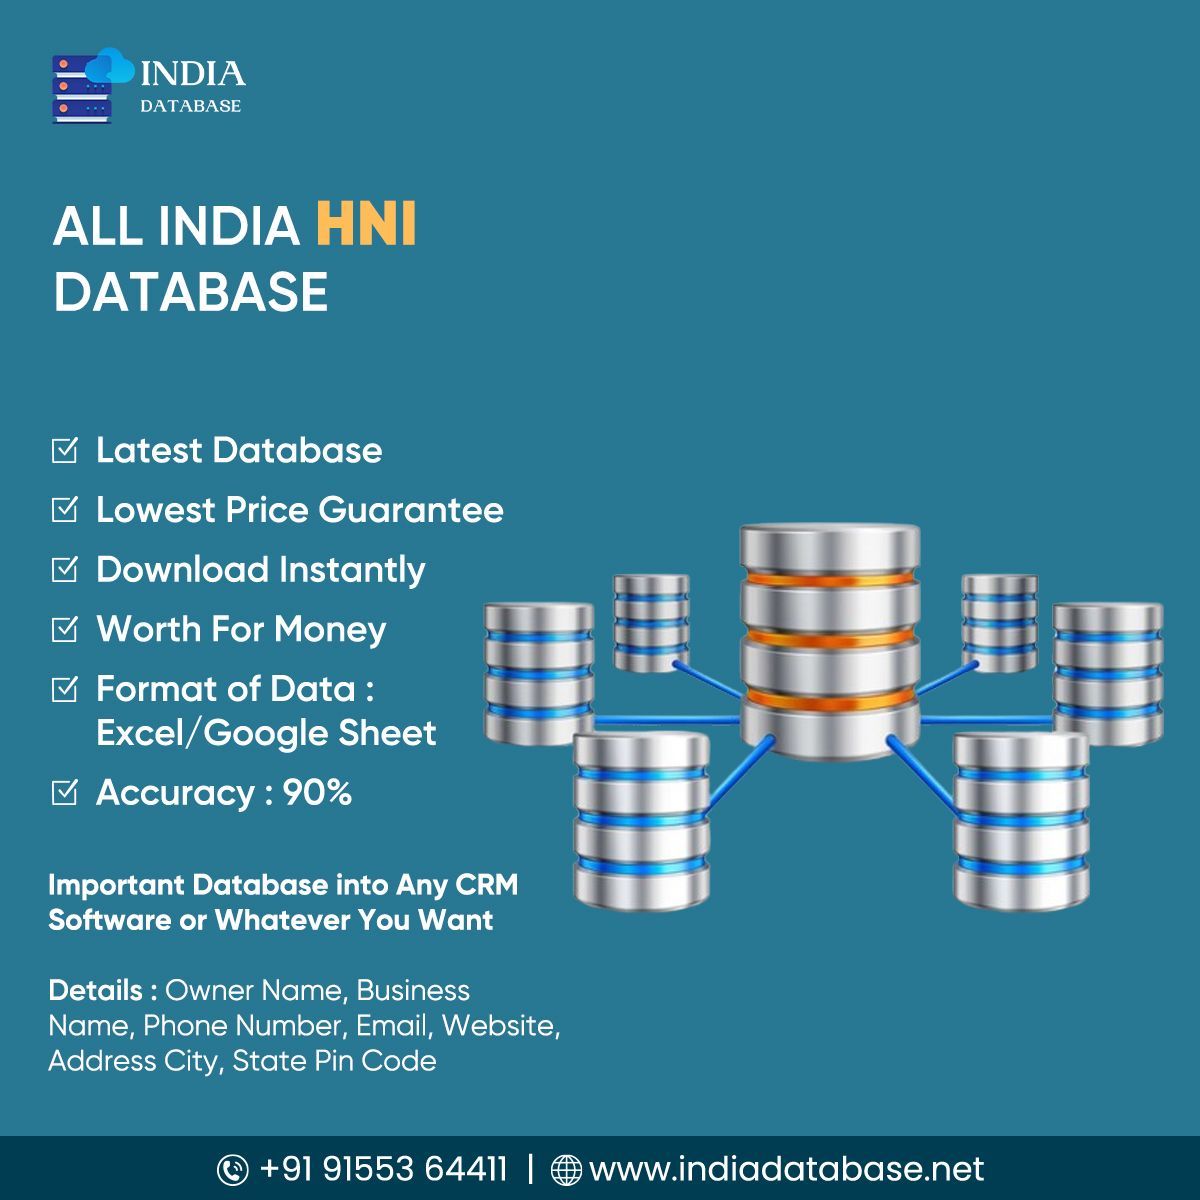 All India HNI Database